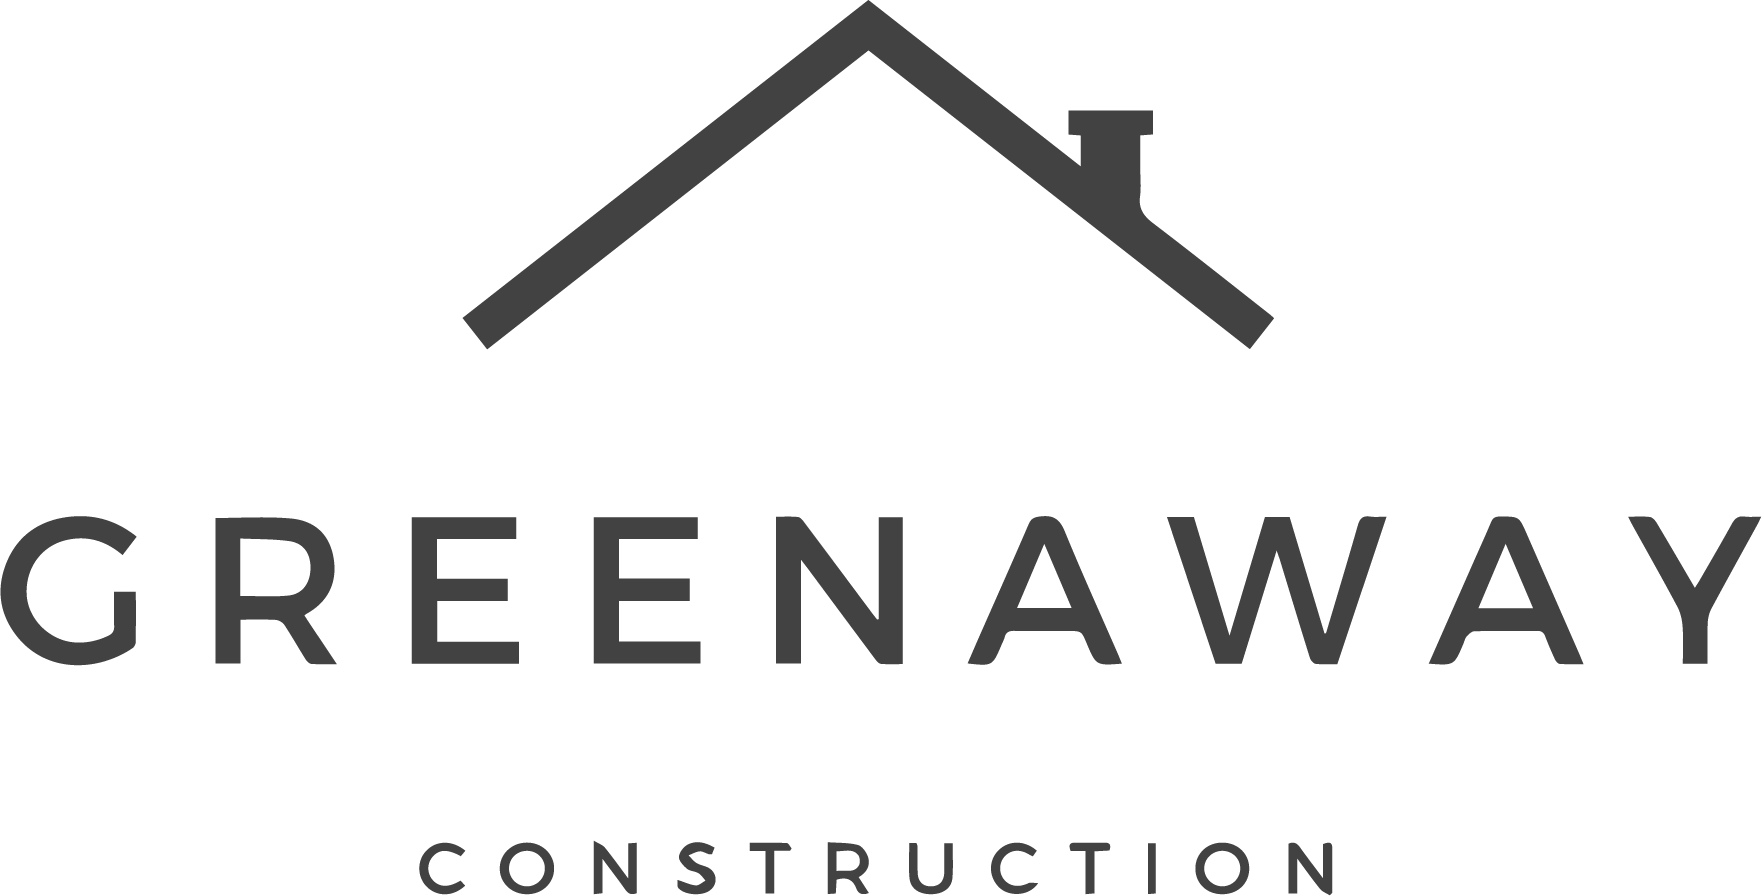 Greenaway Construction